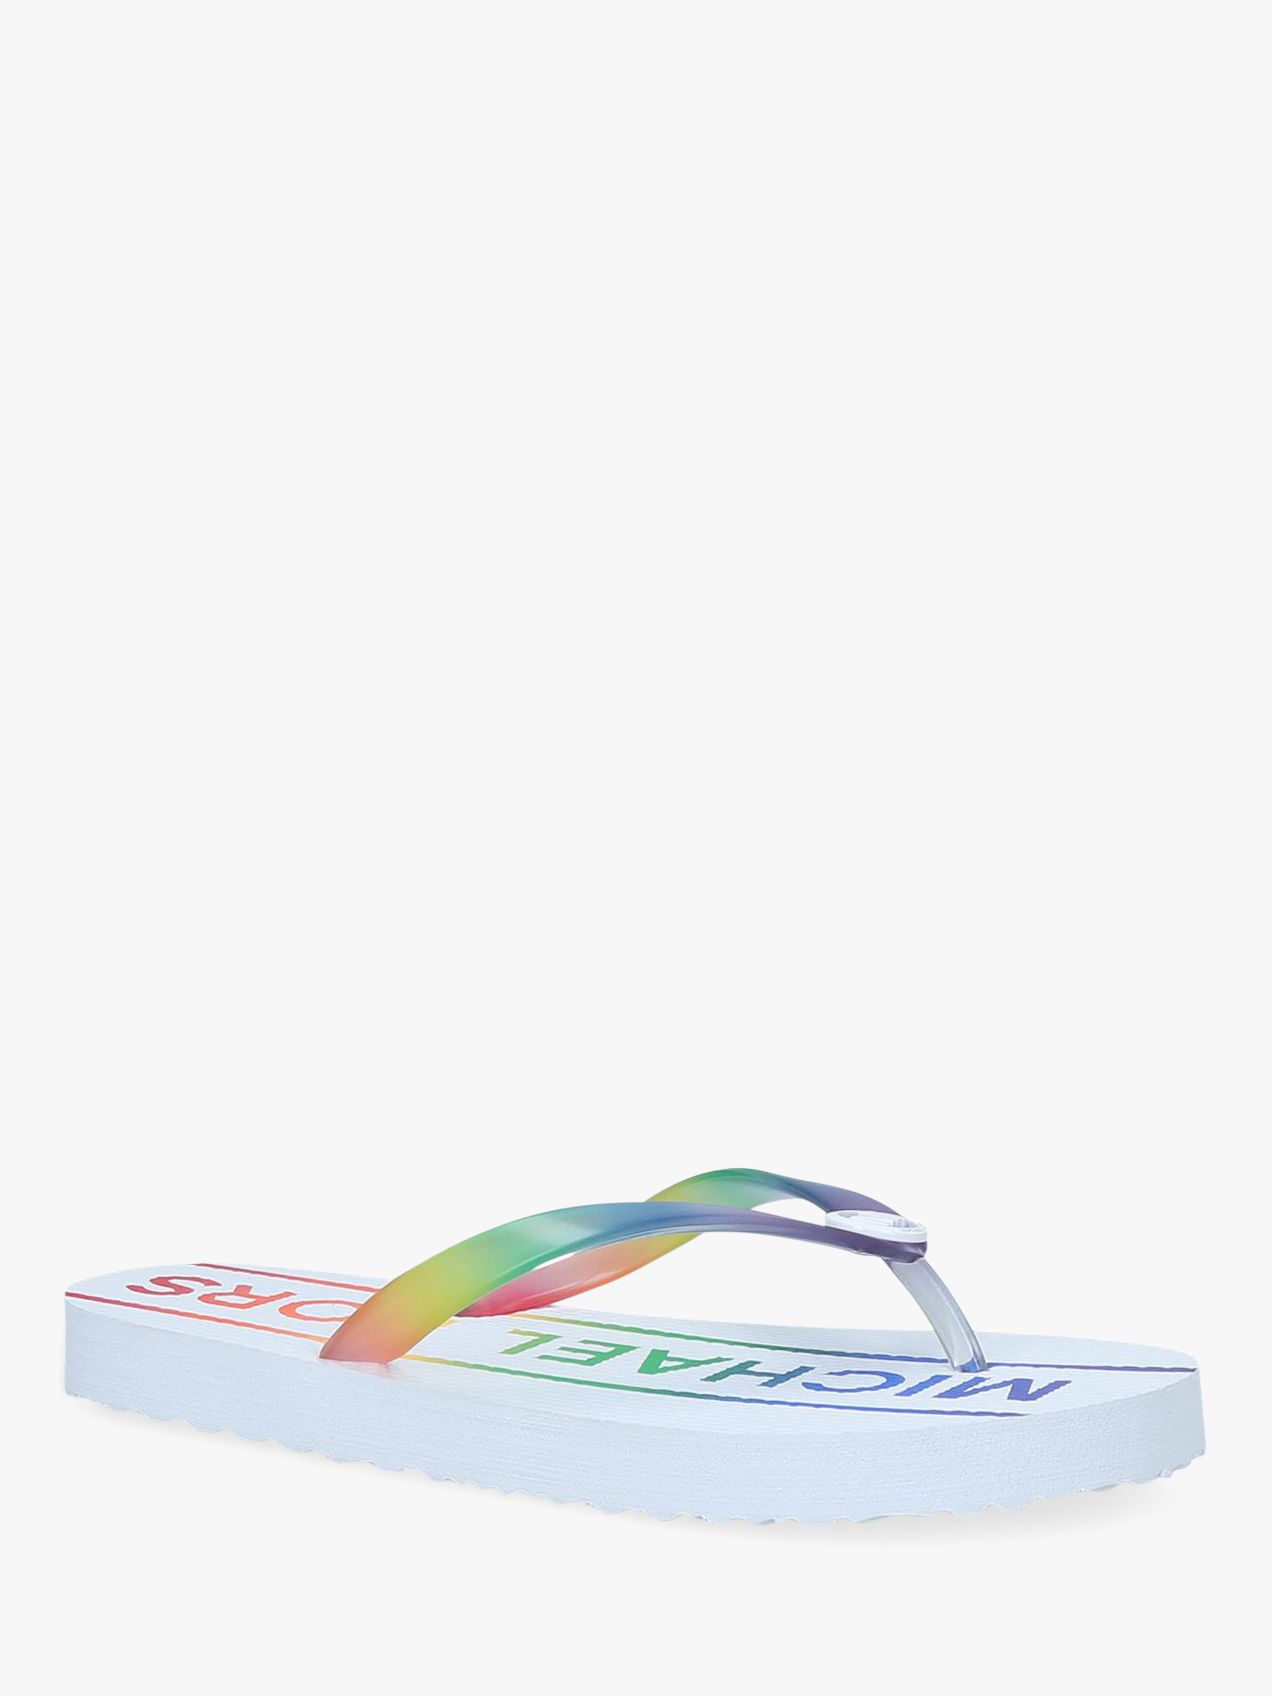 michael kors rainbow sandals